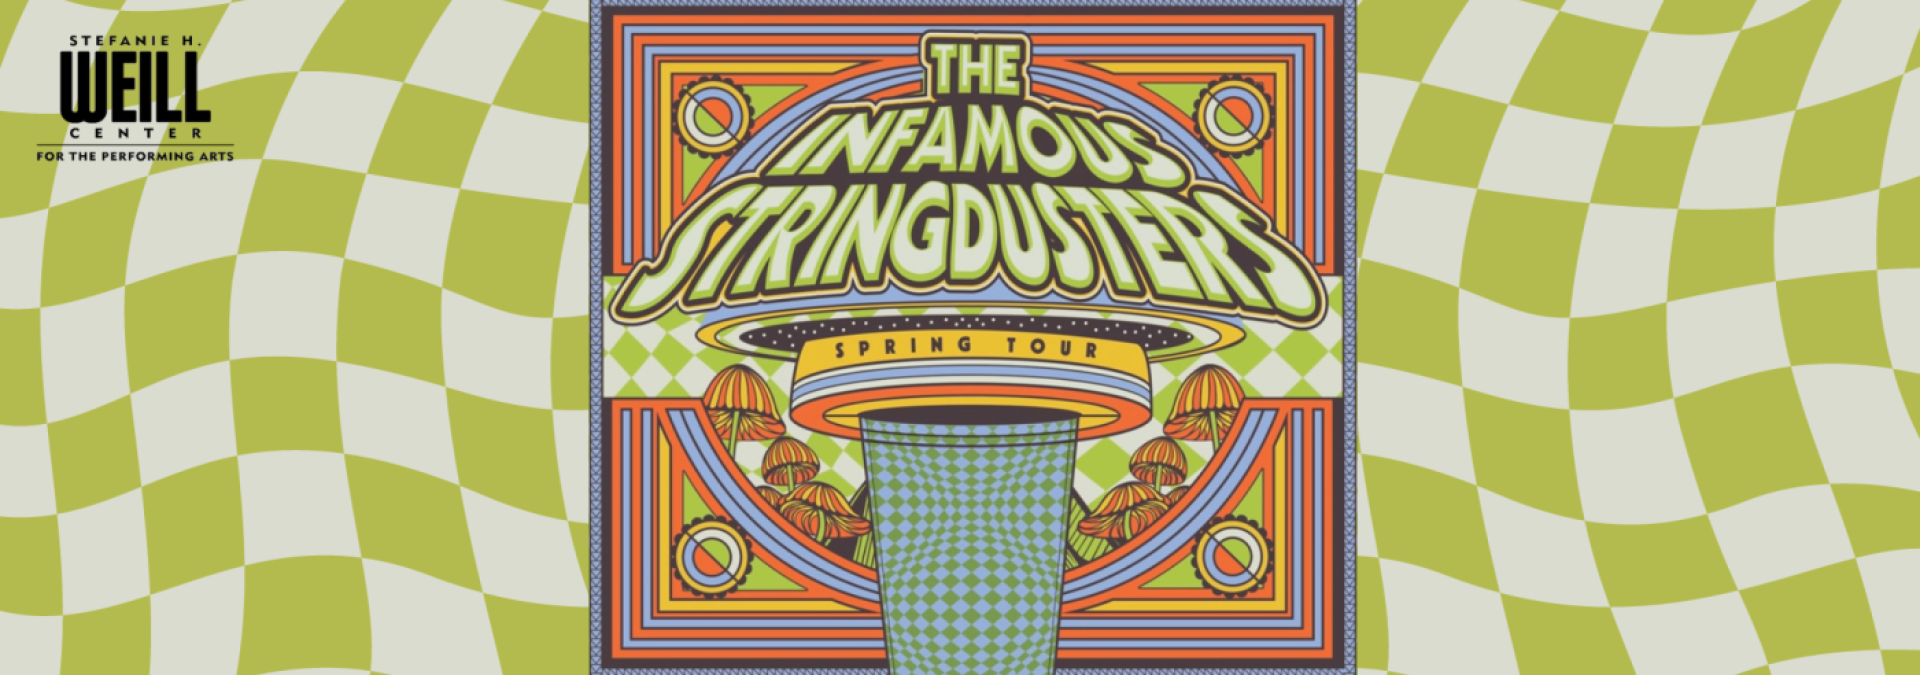 Infamous Stringdusters Website banner